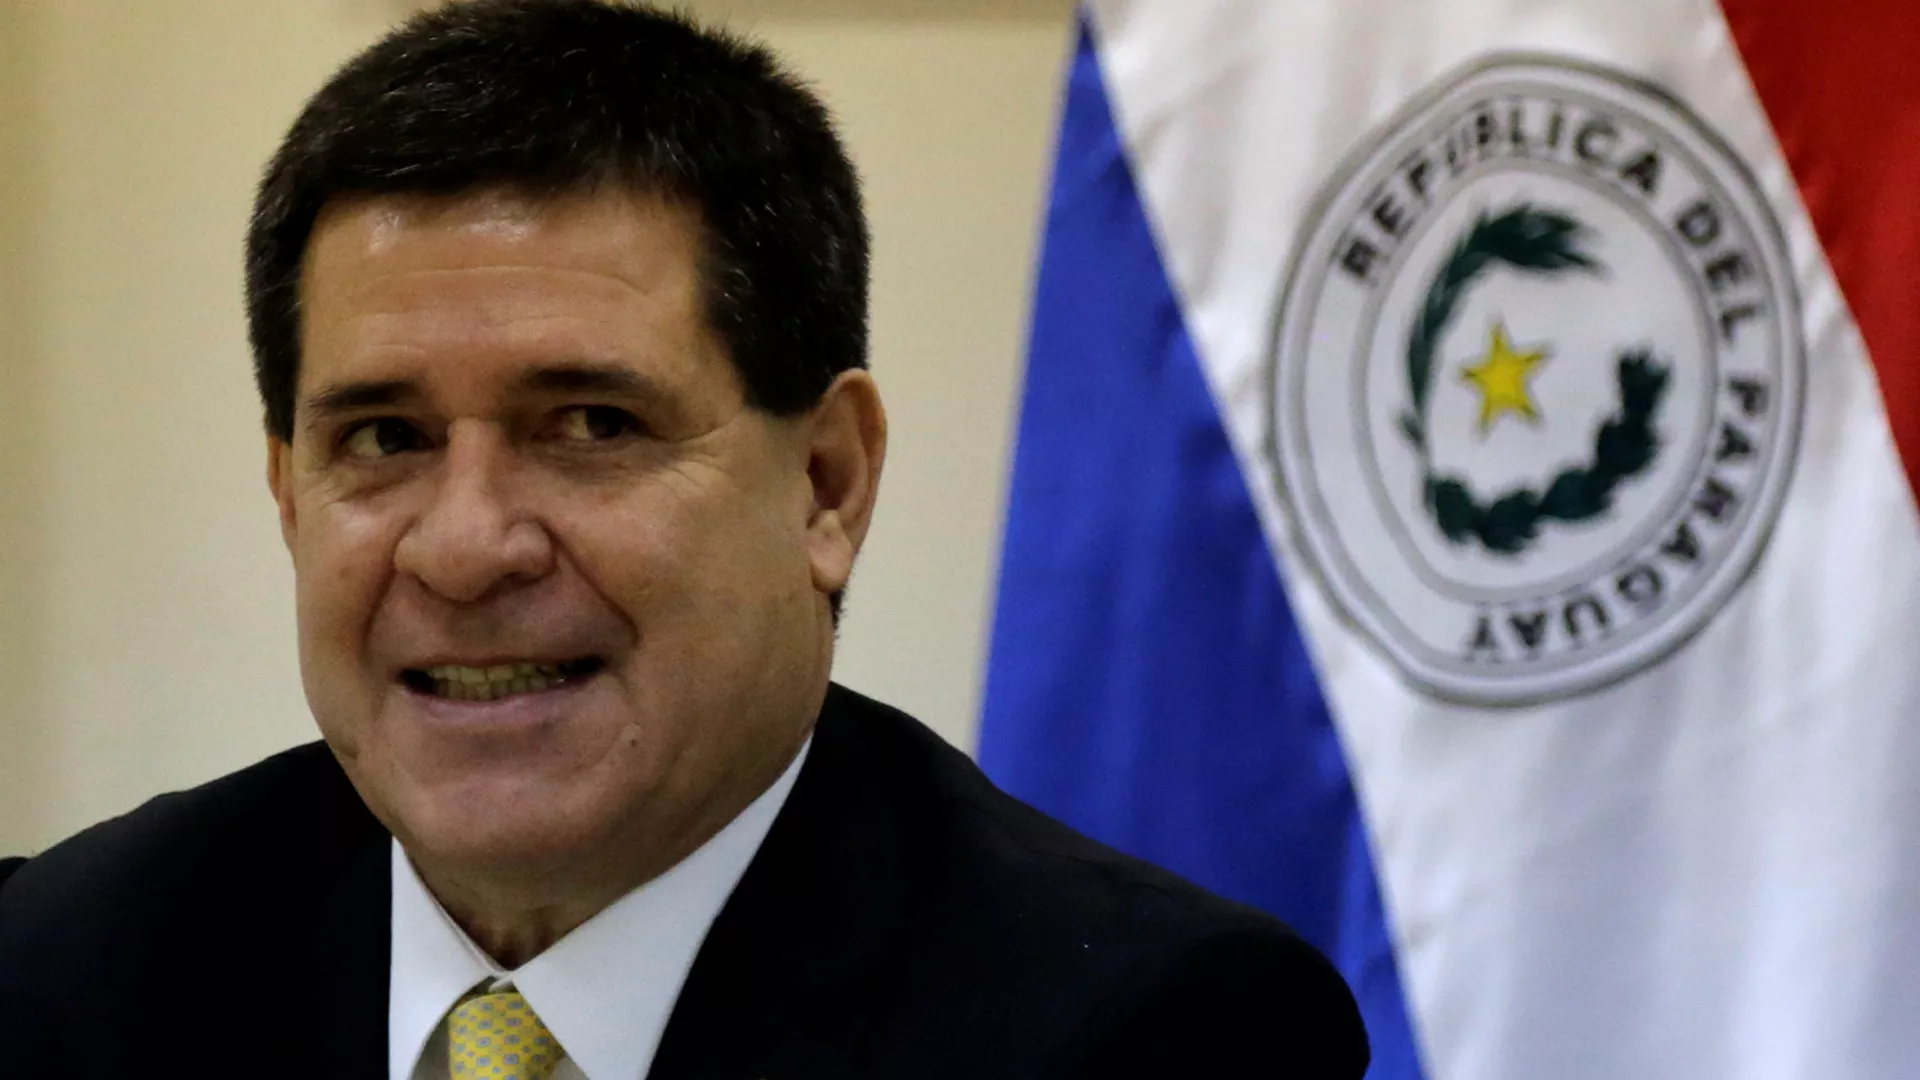  La Fiscalía paraguaya abre investigación contra expresidente Cartes por lavado de activos